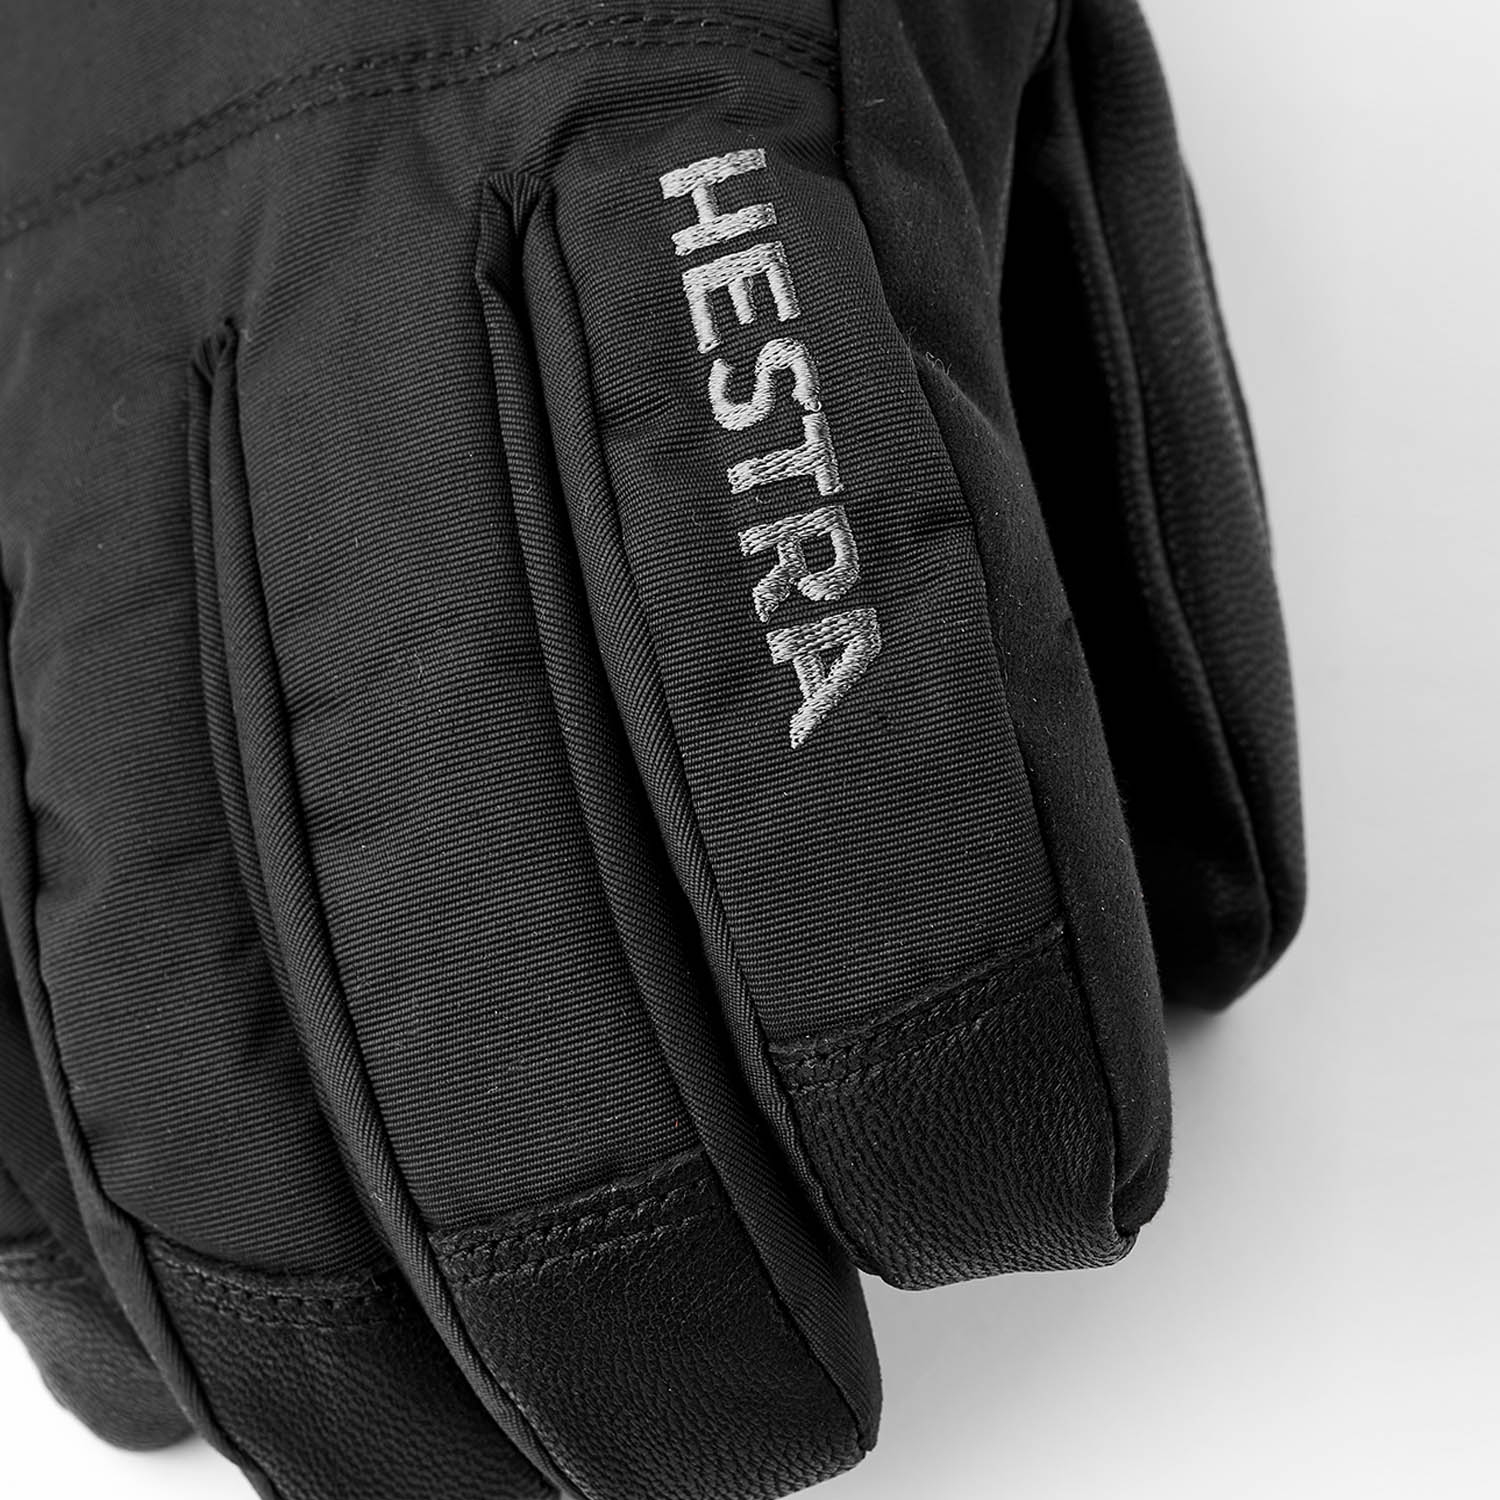 Hestra All Mountain Czone Gloves Black 2021